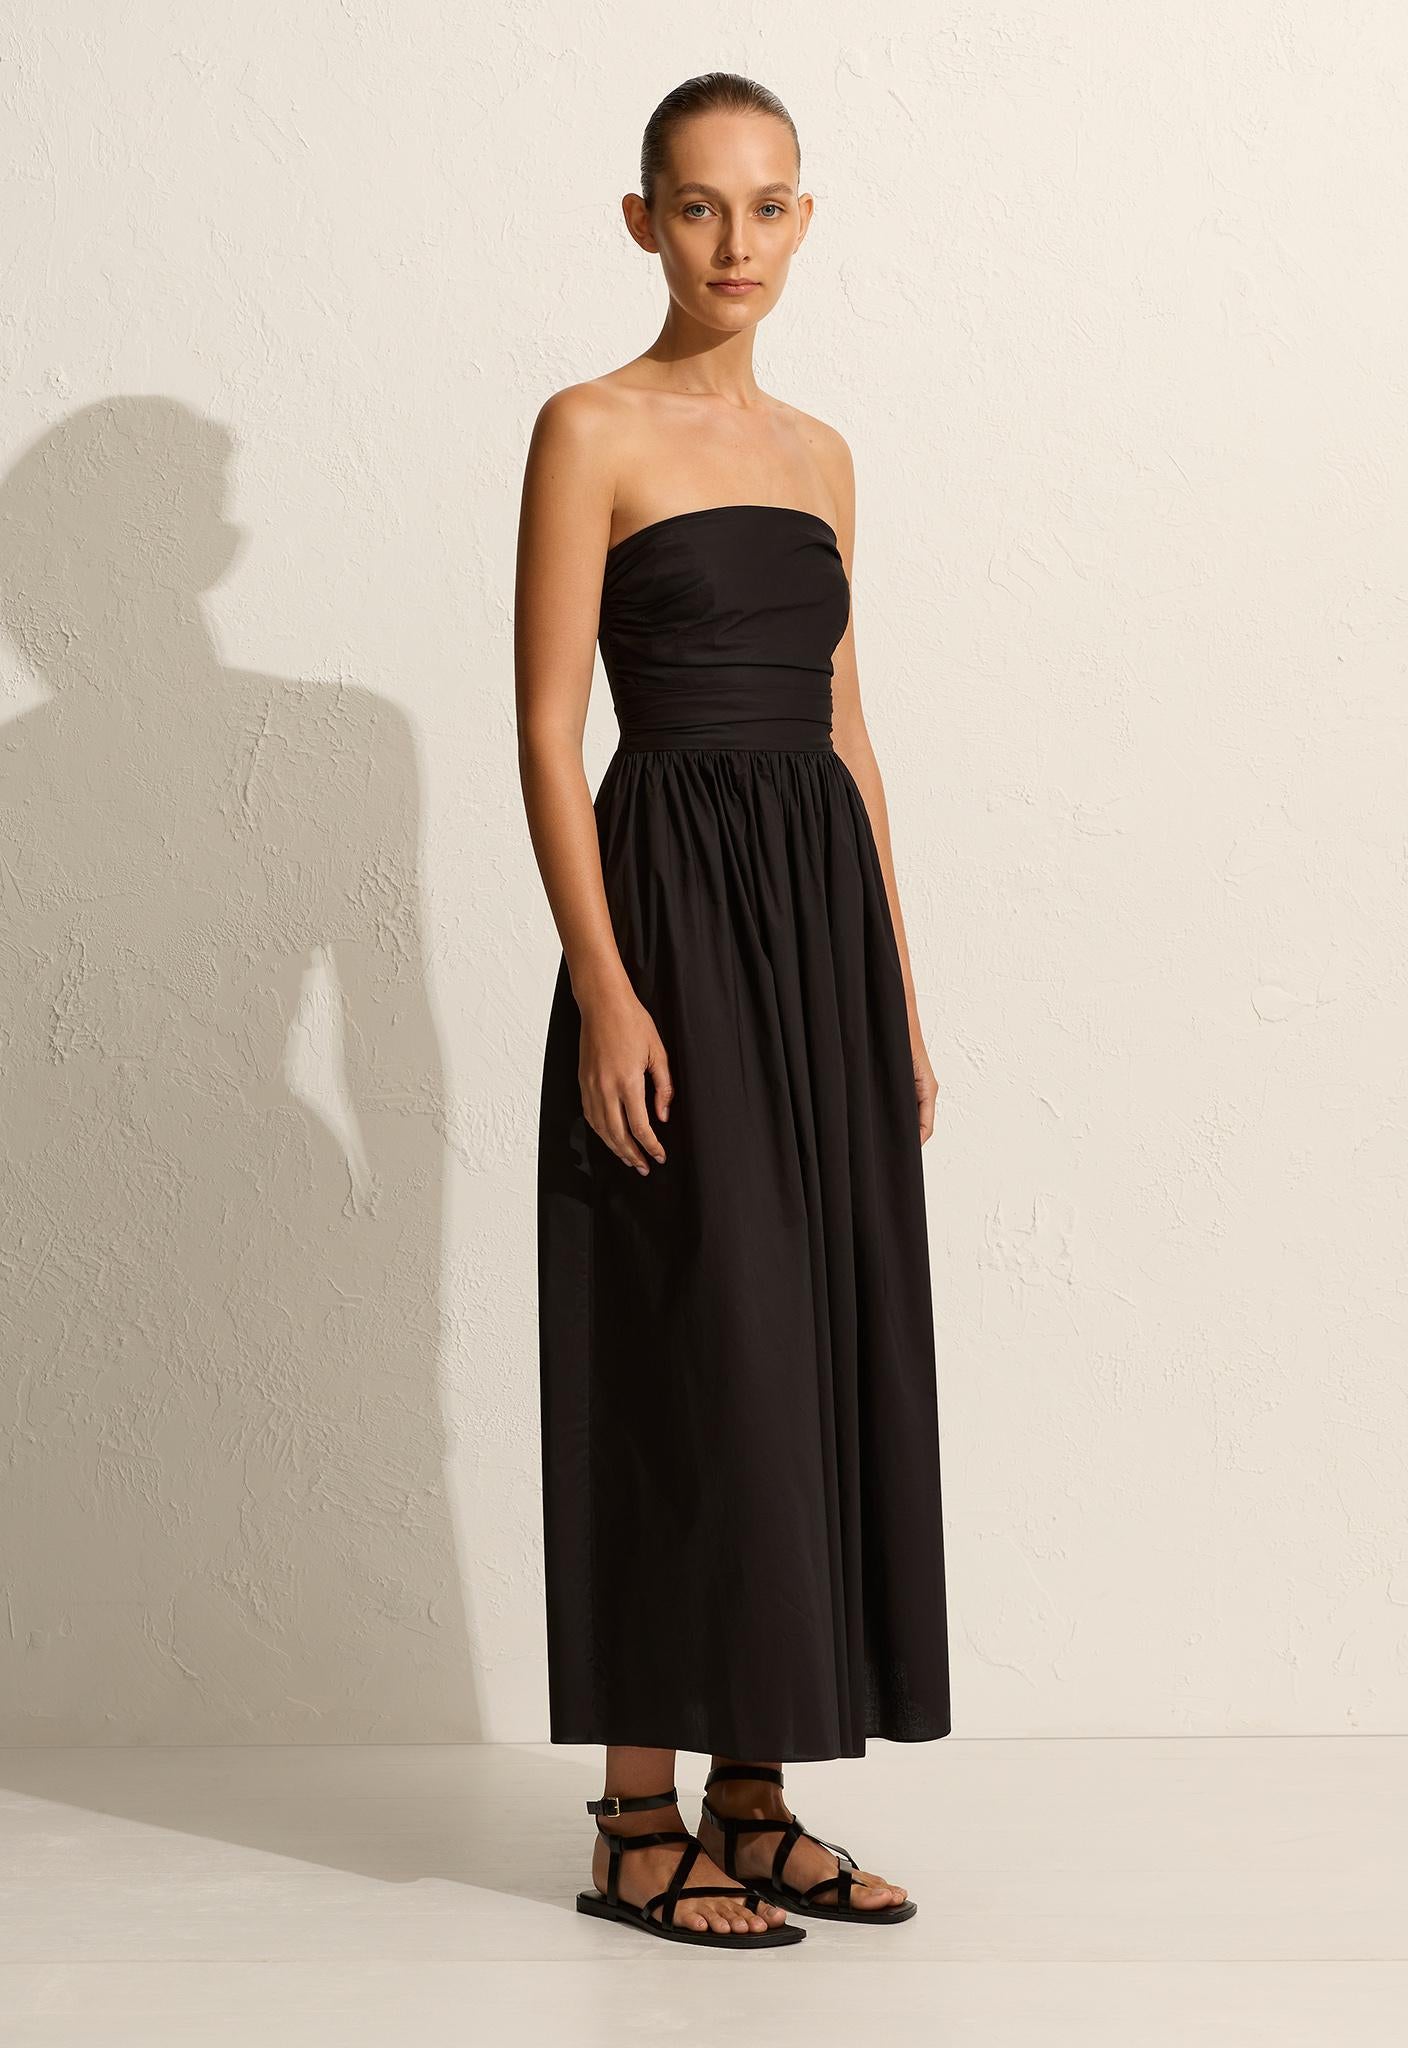 Strapless Lace Up Dress - Black - Matteau